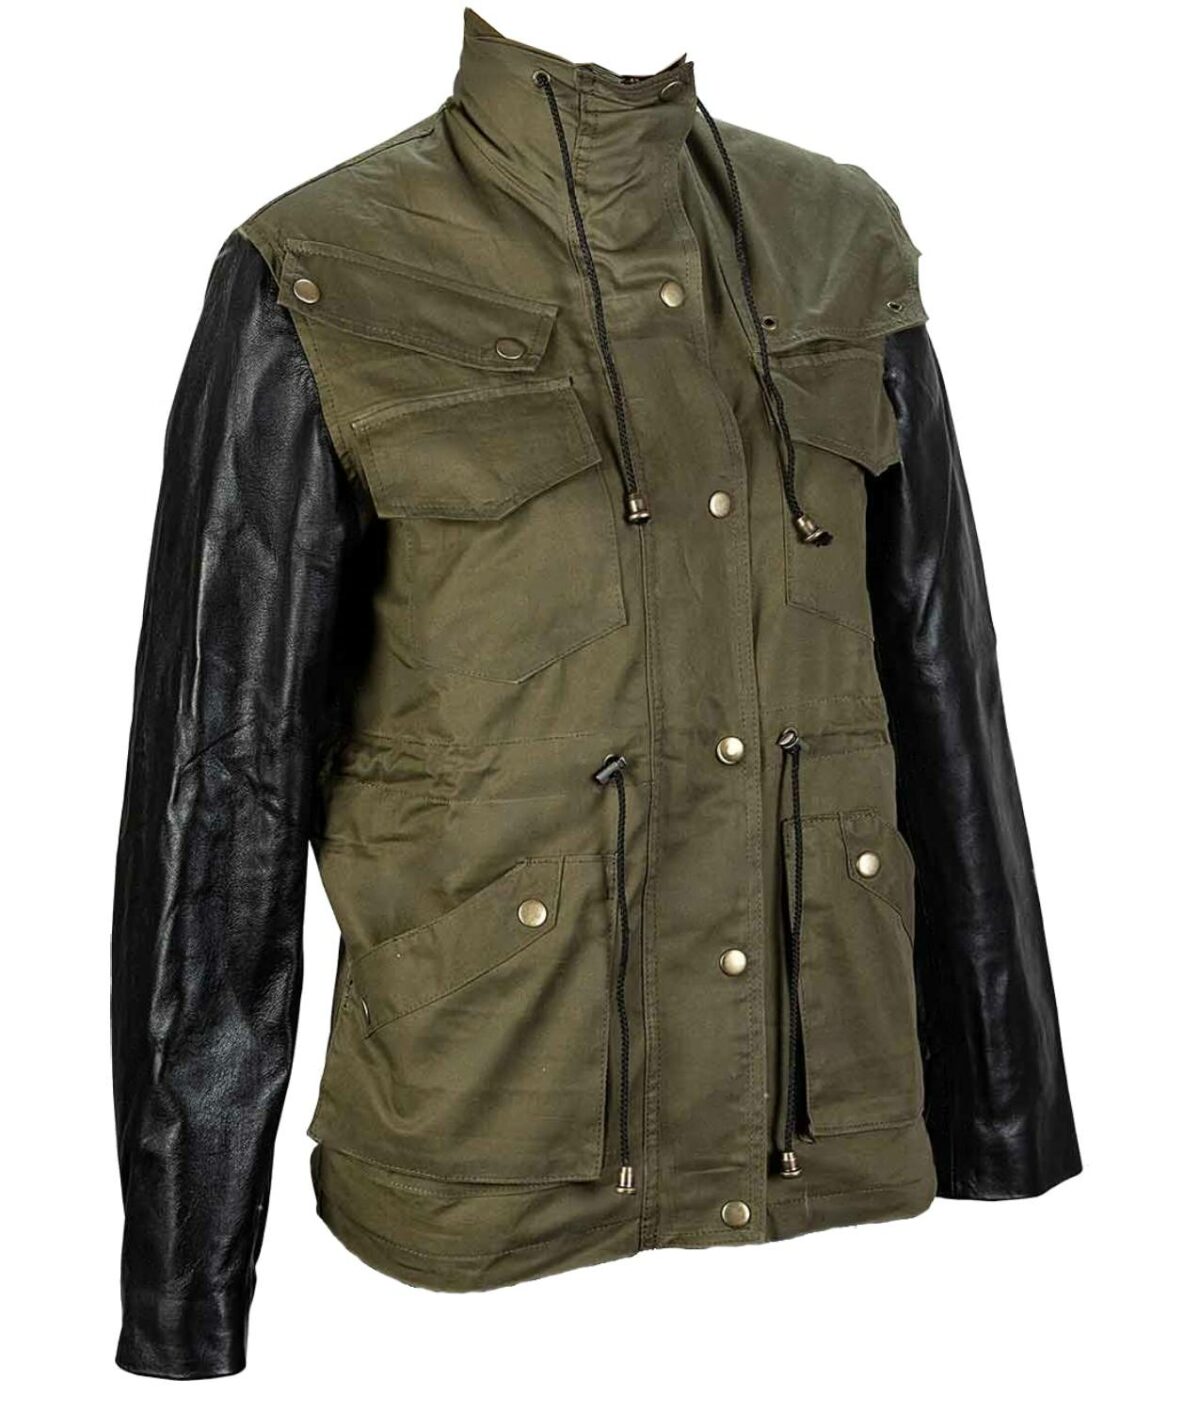 Military Khaki Jacket with Leather Sleeves